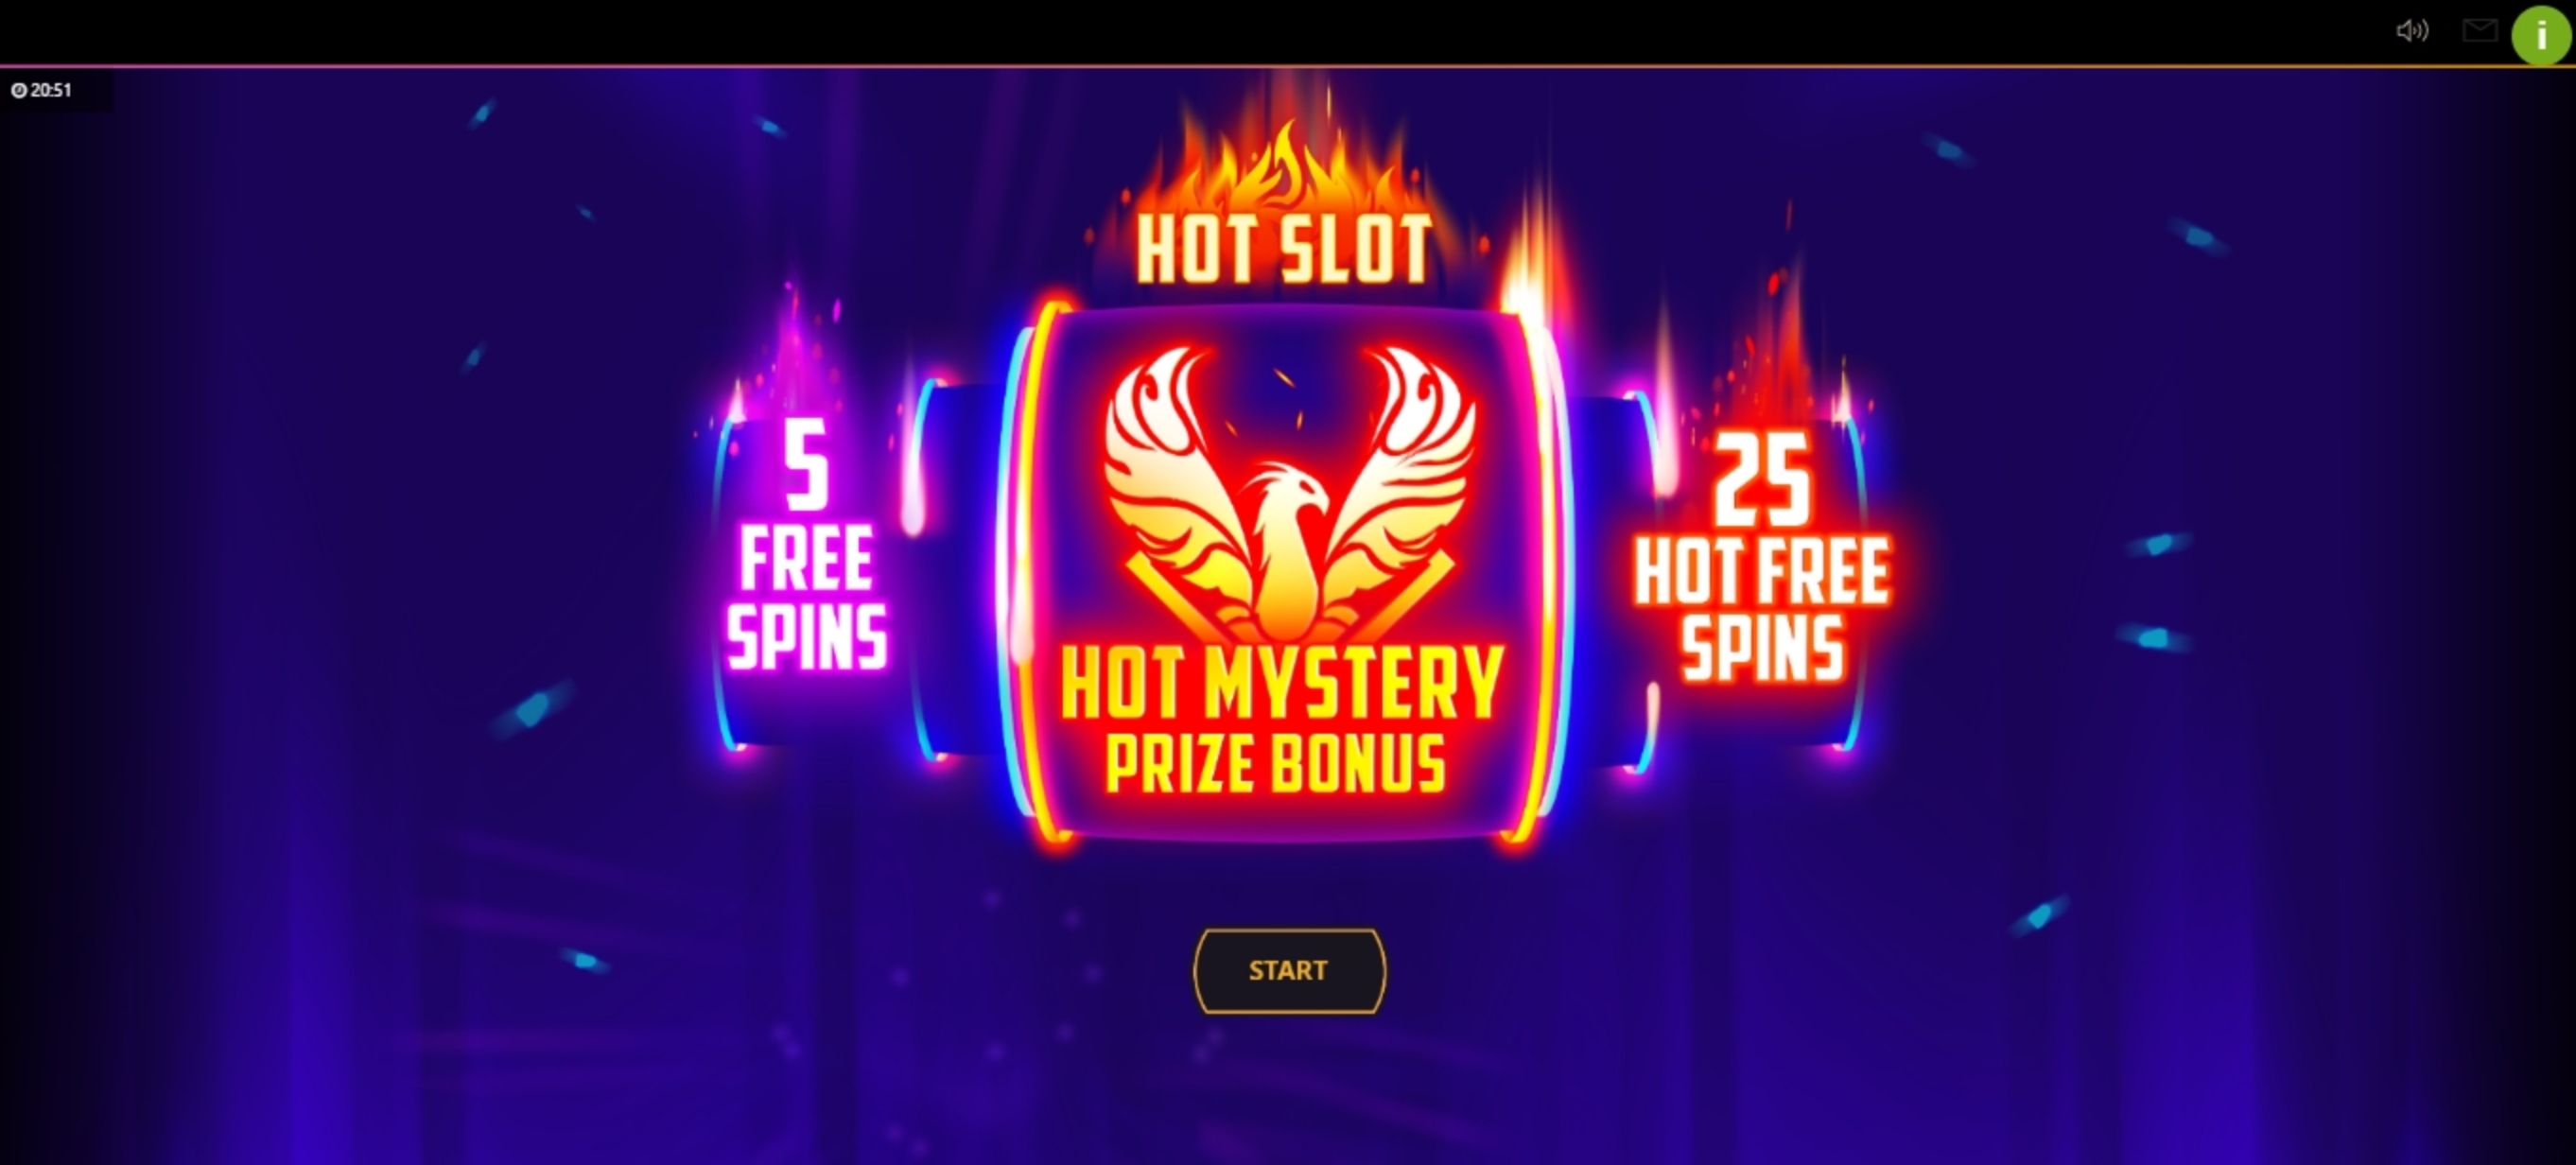 Play Hot Slot Free Casino Slot Game by Cayetano Gaming